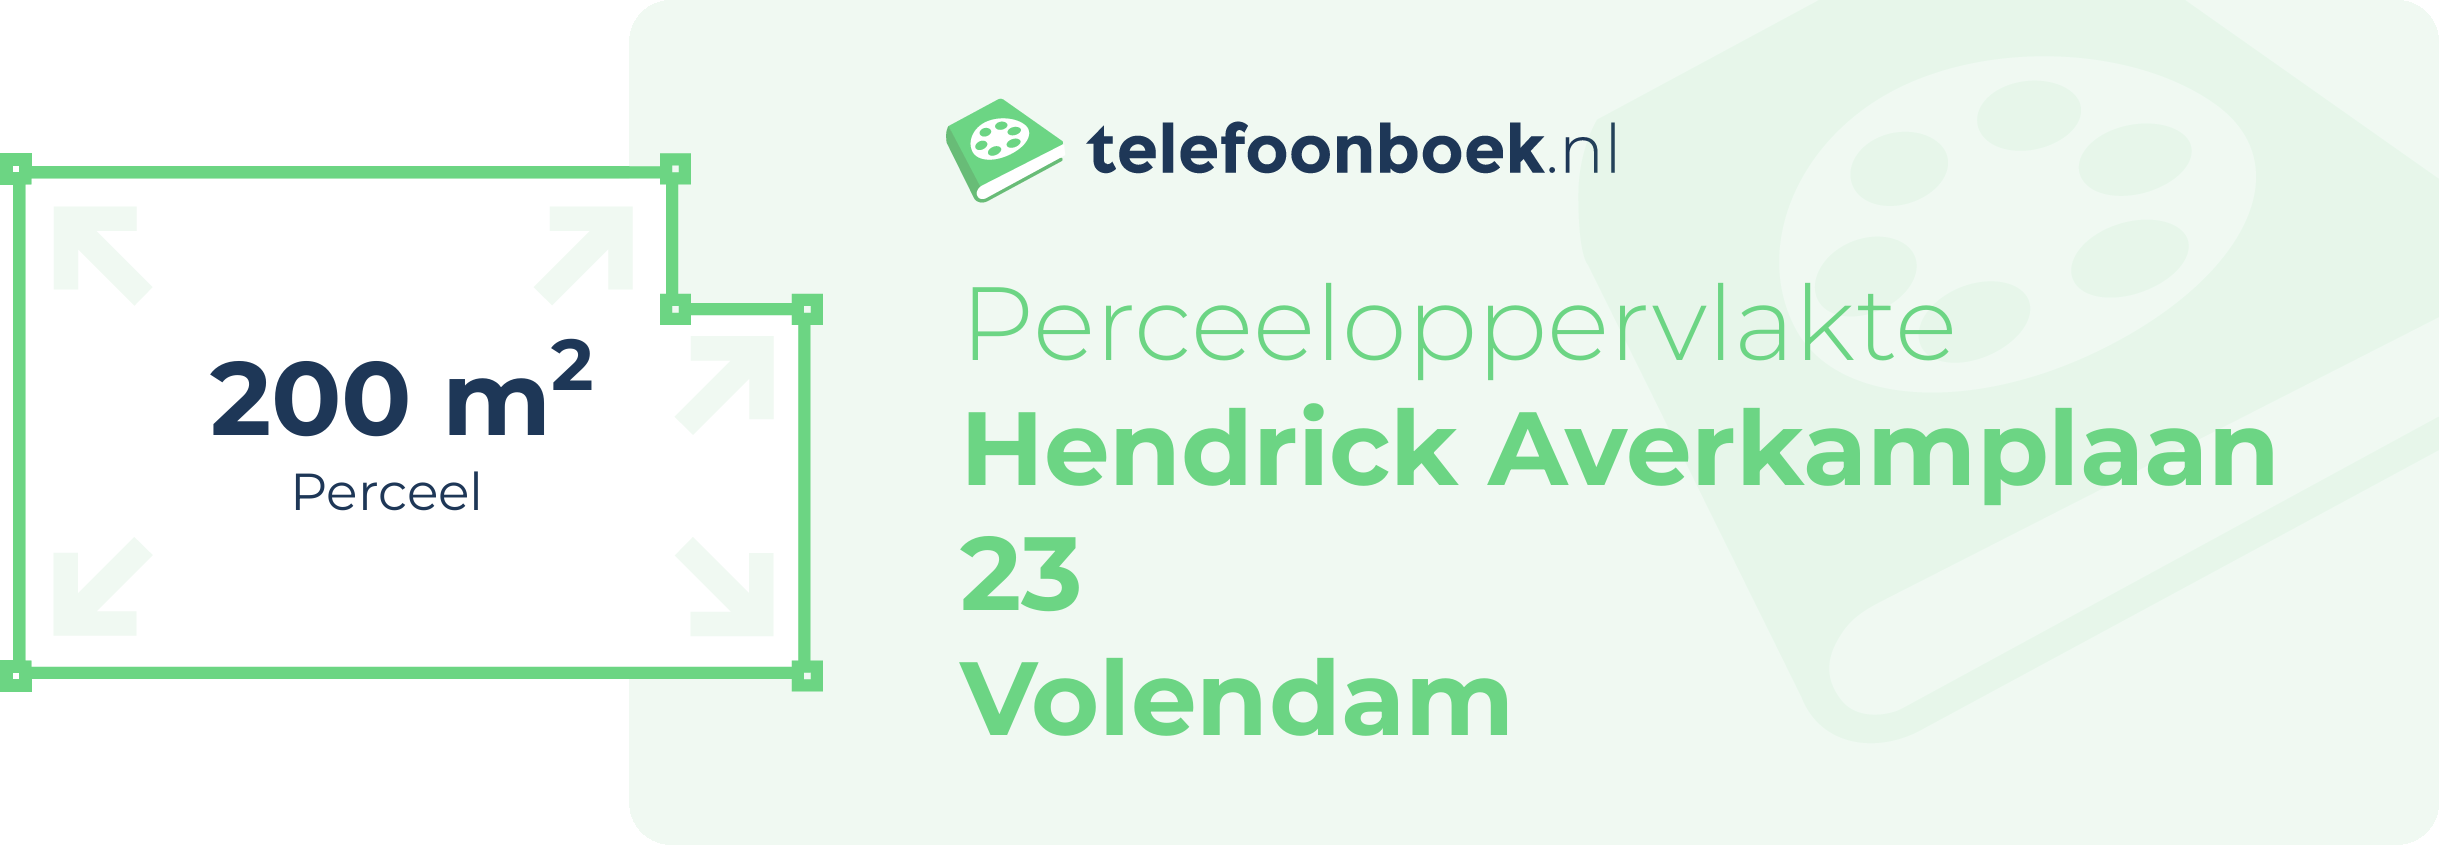 Perceeloppervlakte Hendrick Averkamplaan 23 Volendam